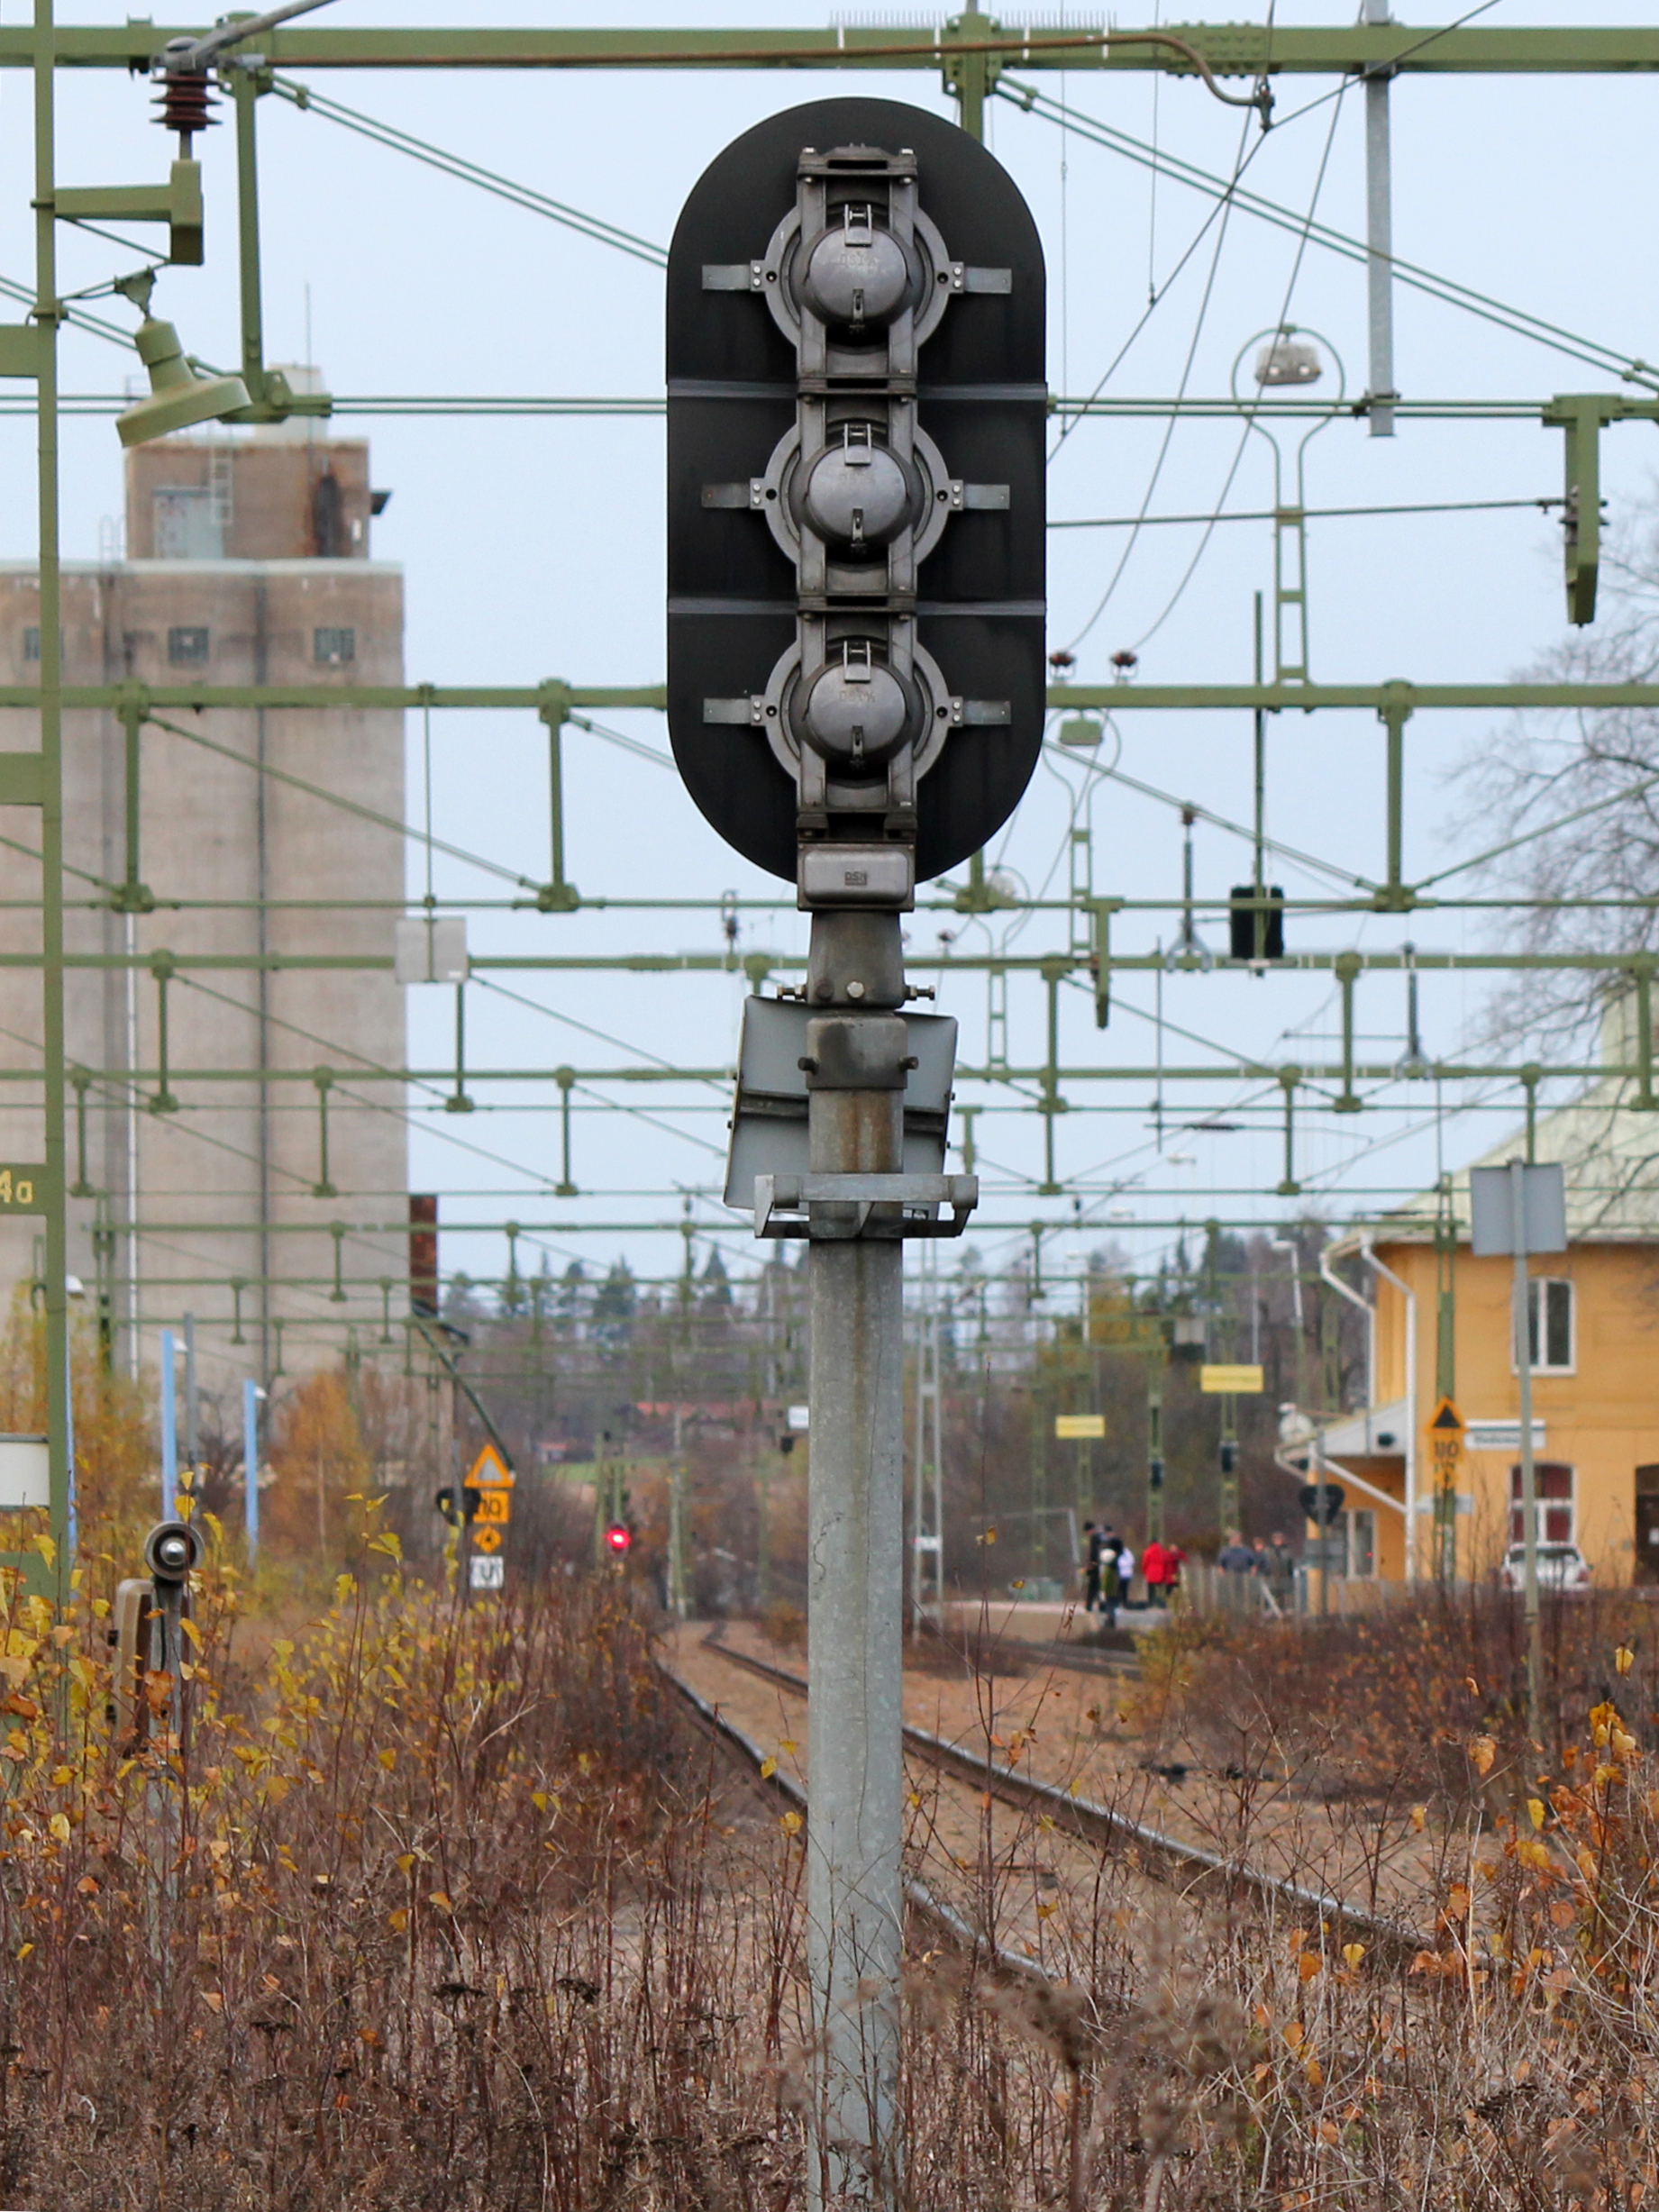 File:Back of train signal Hedemora.jpg - Wikimedia Commons